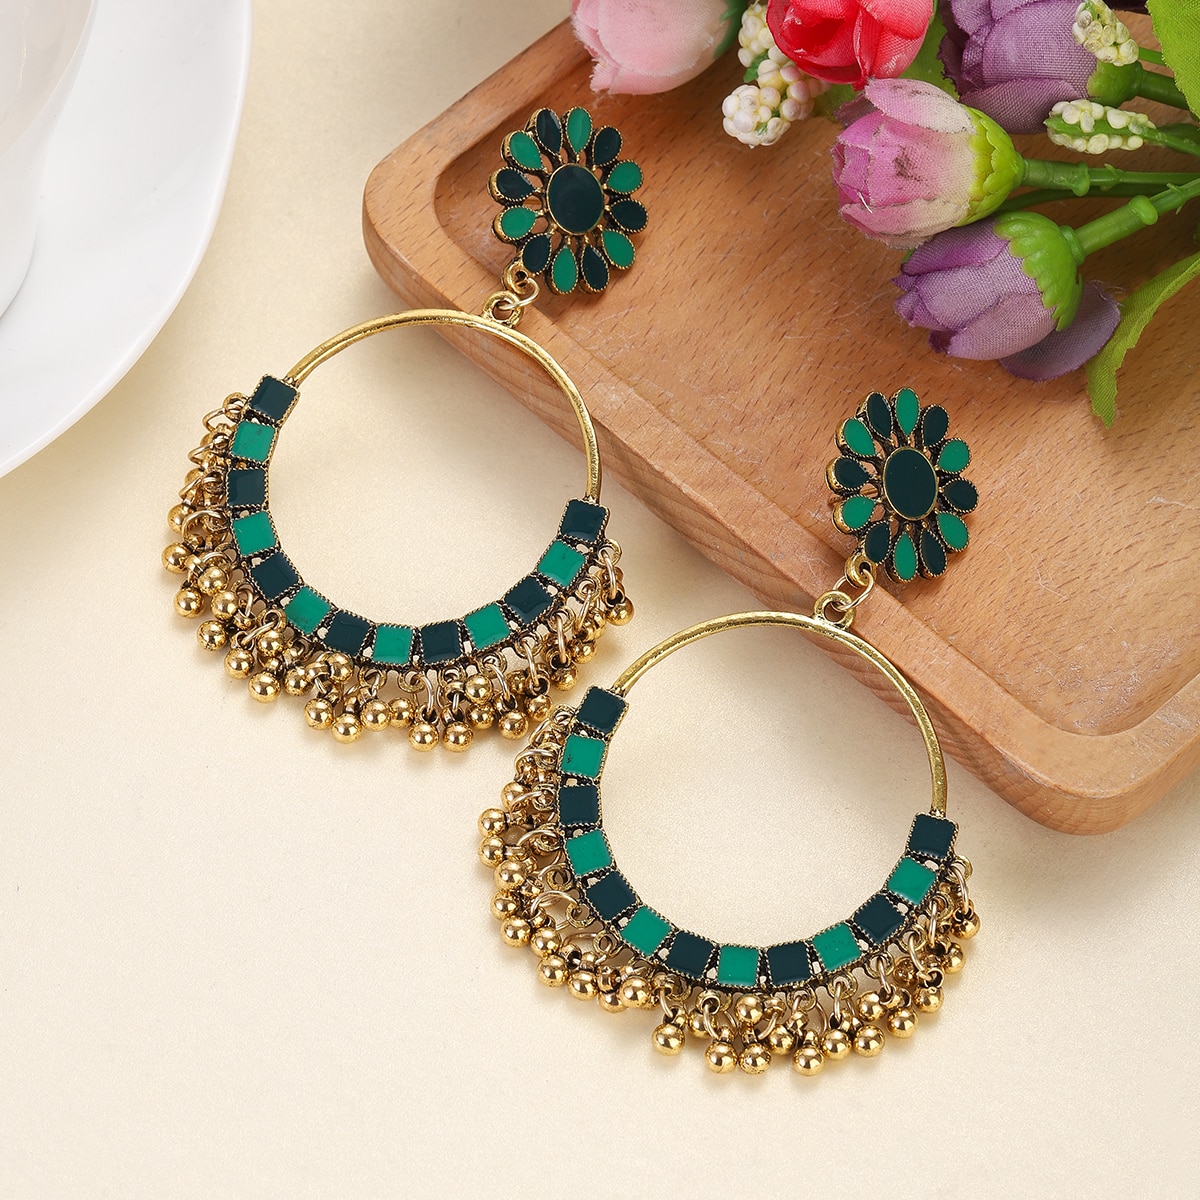 Ethnic-Vintage-Big-Round-Dangle-Earrings-for-Women-Boho-Green-Flower-Beads-Tassel-Earrings-Party-Jew-1005005057264367-7